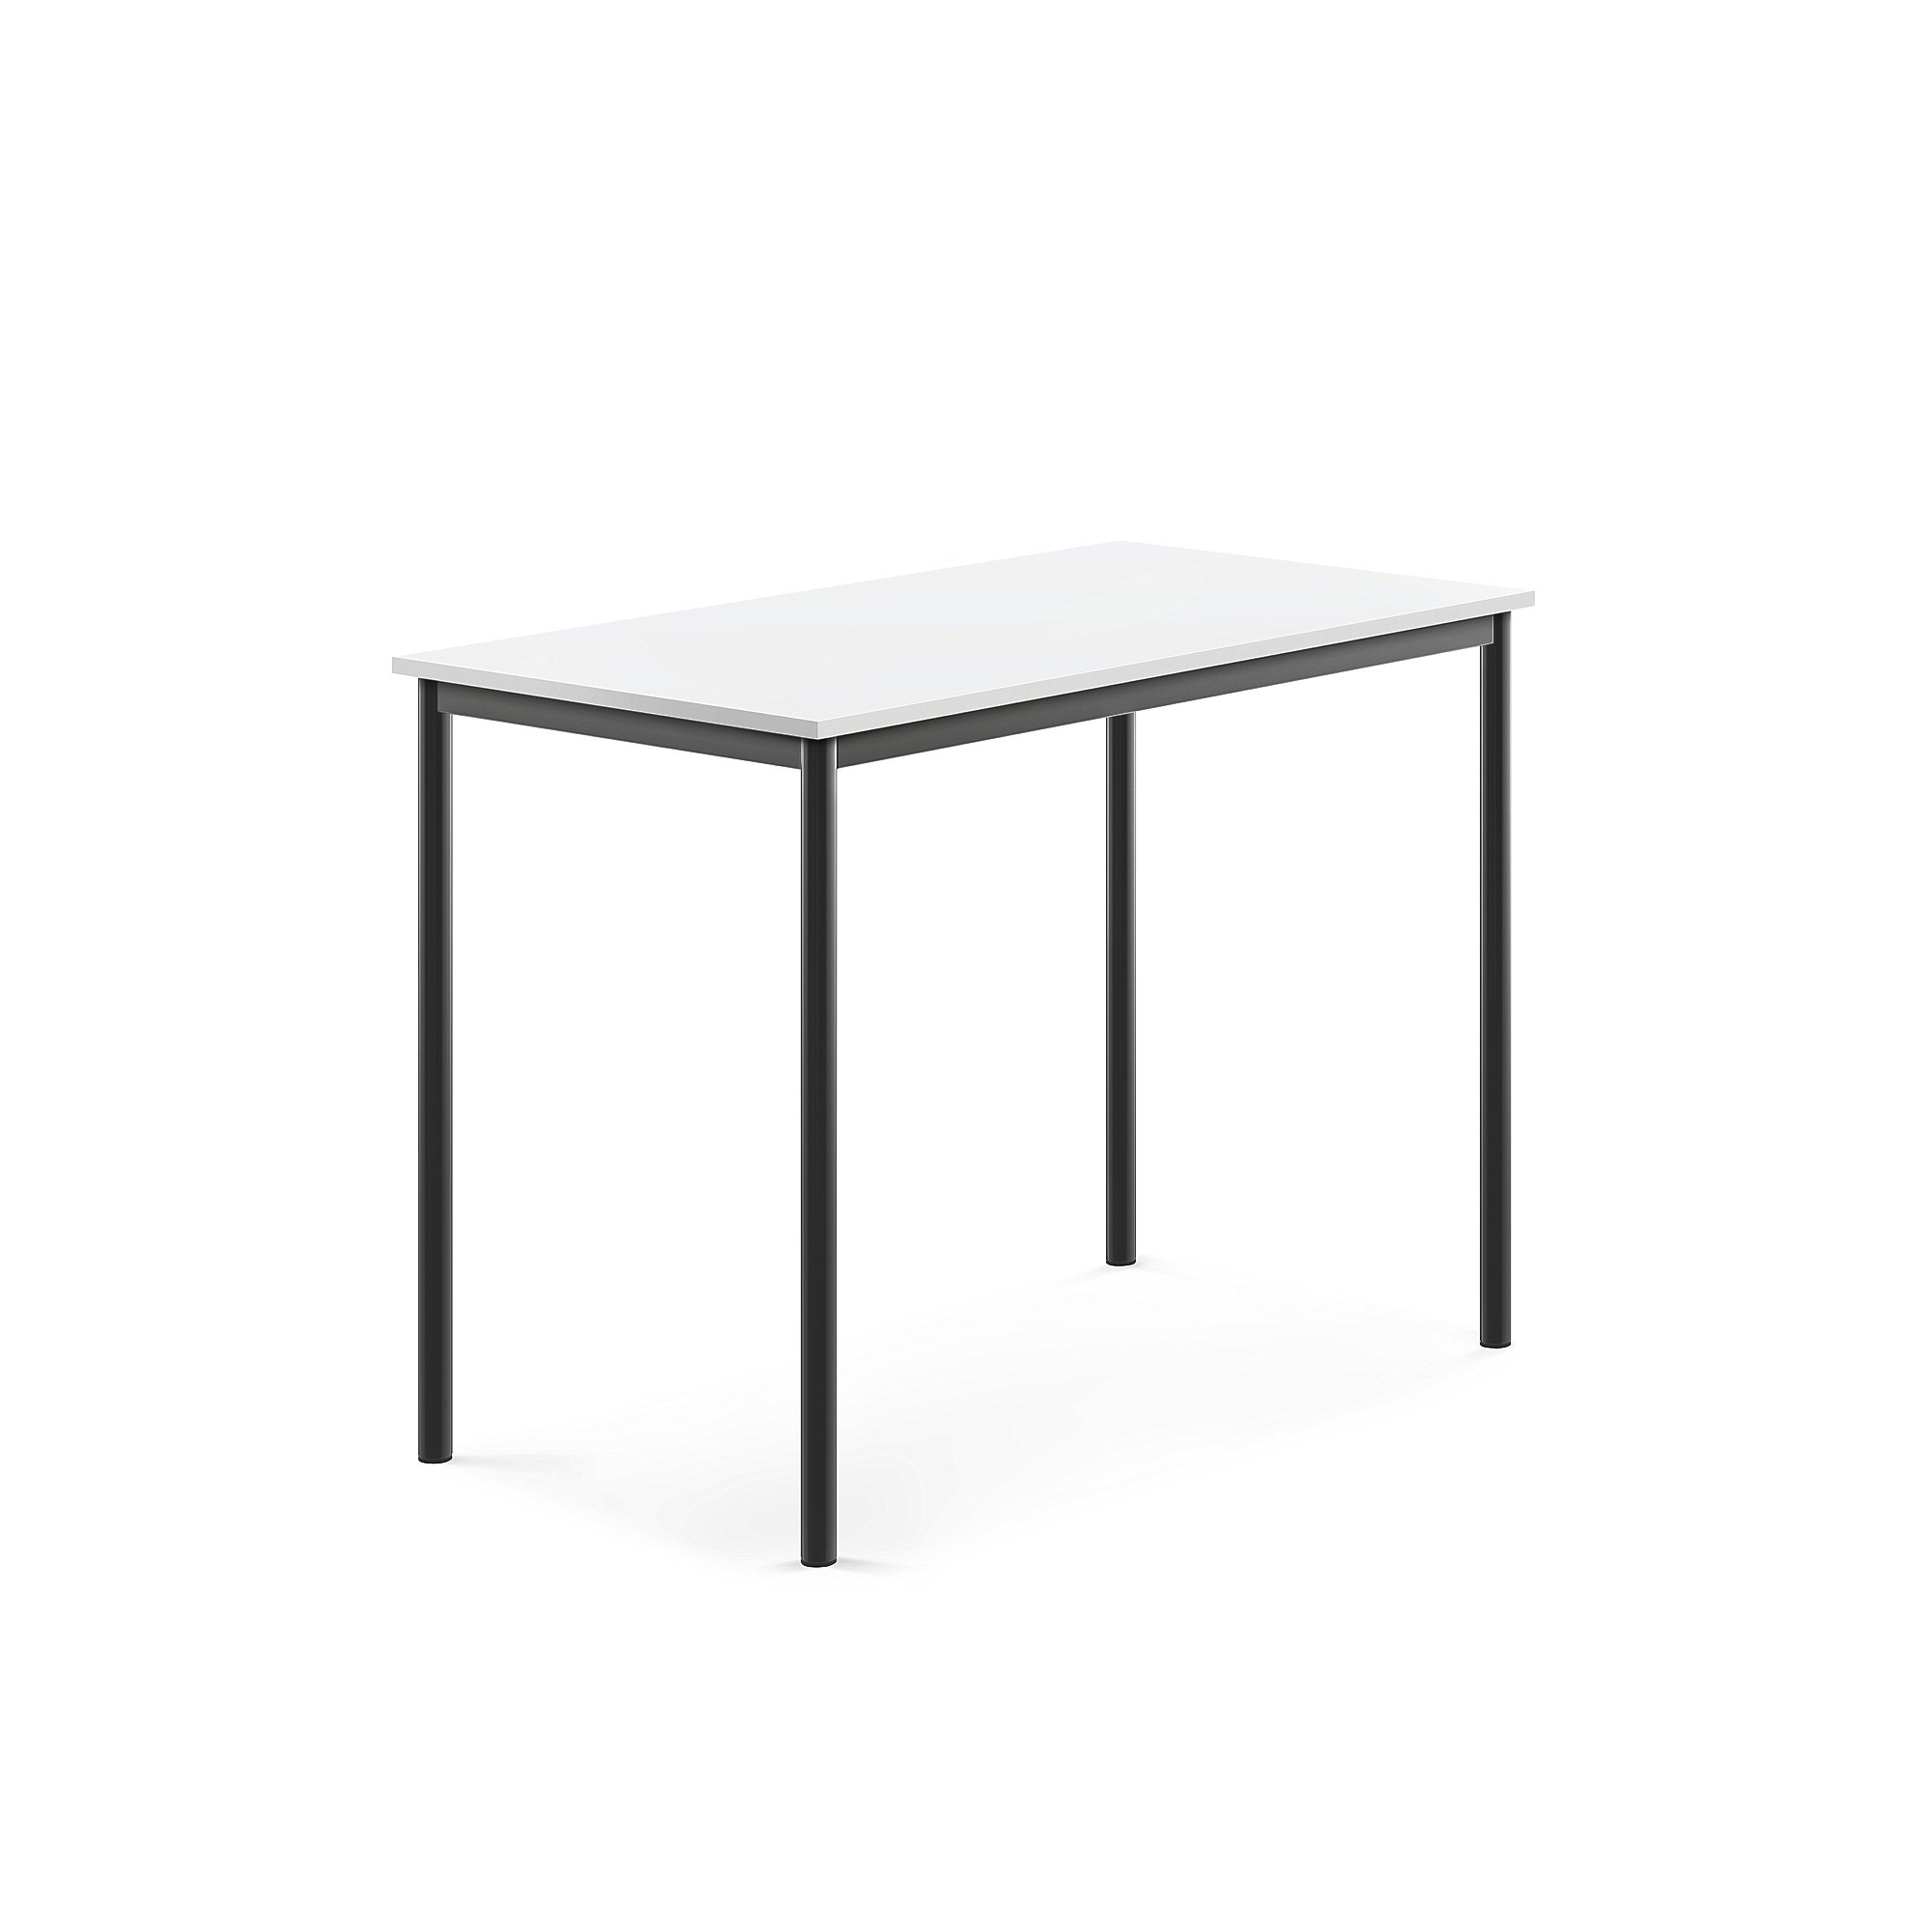 Stůl BORÅS, 1200x700x900 mm, antracitově šedé nohy, HPL deska, bílá